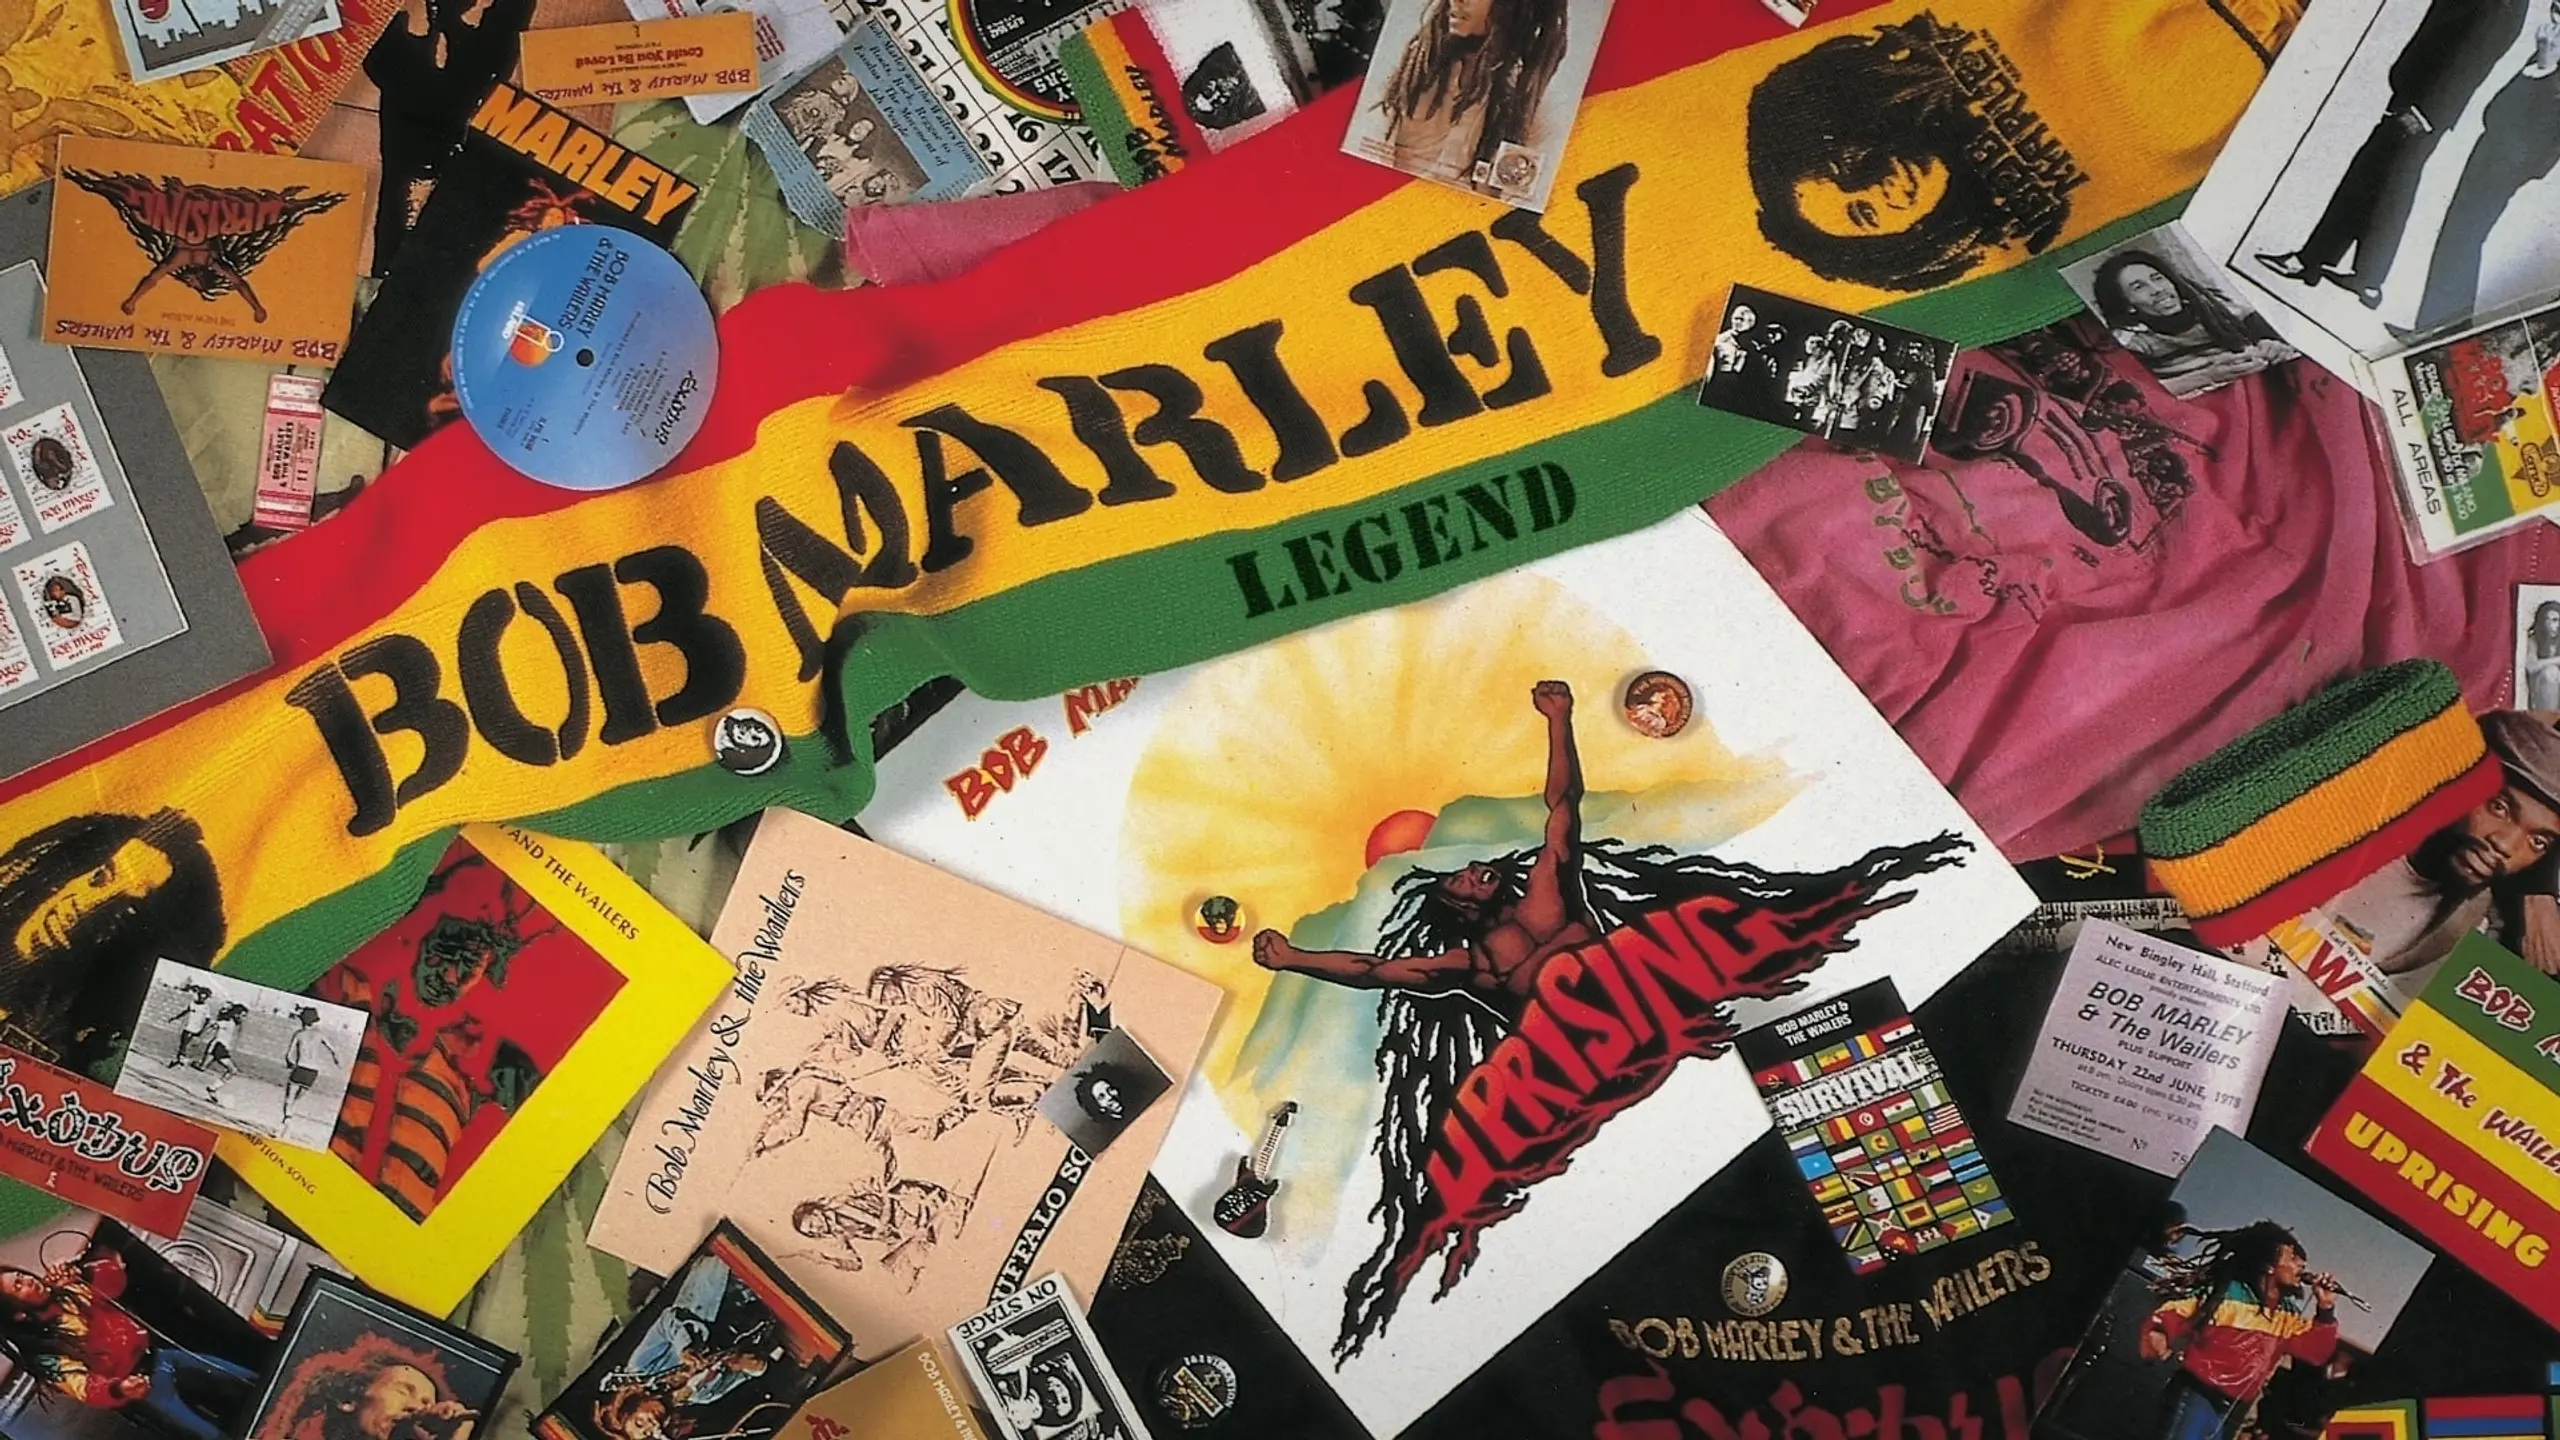 Bob Marley and the Wailers - Legend